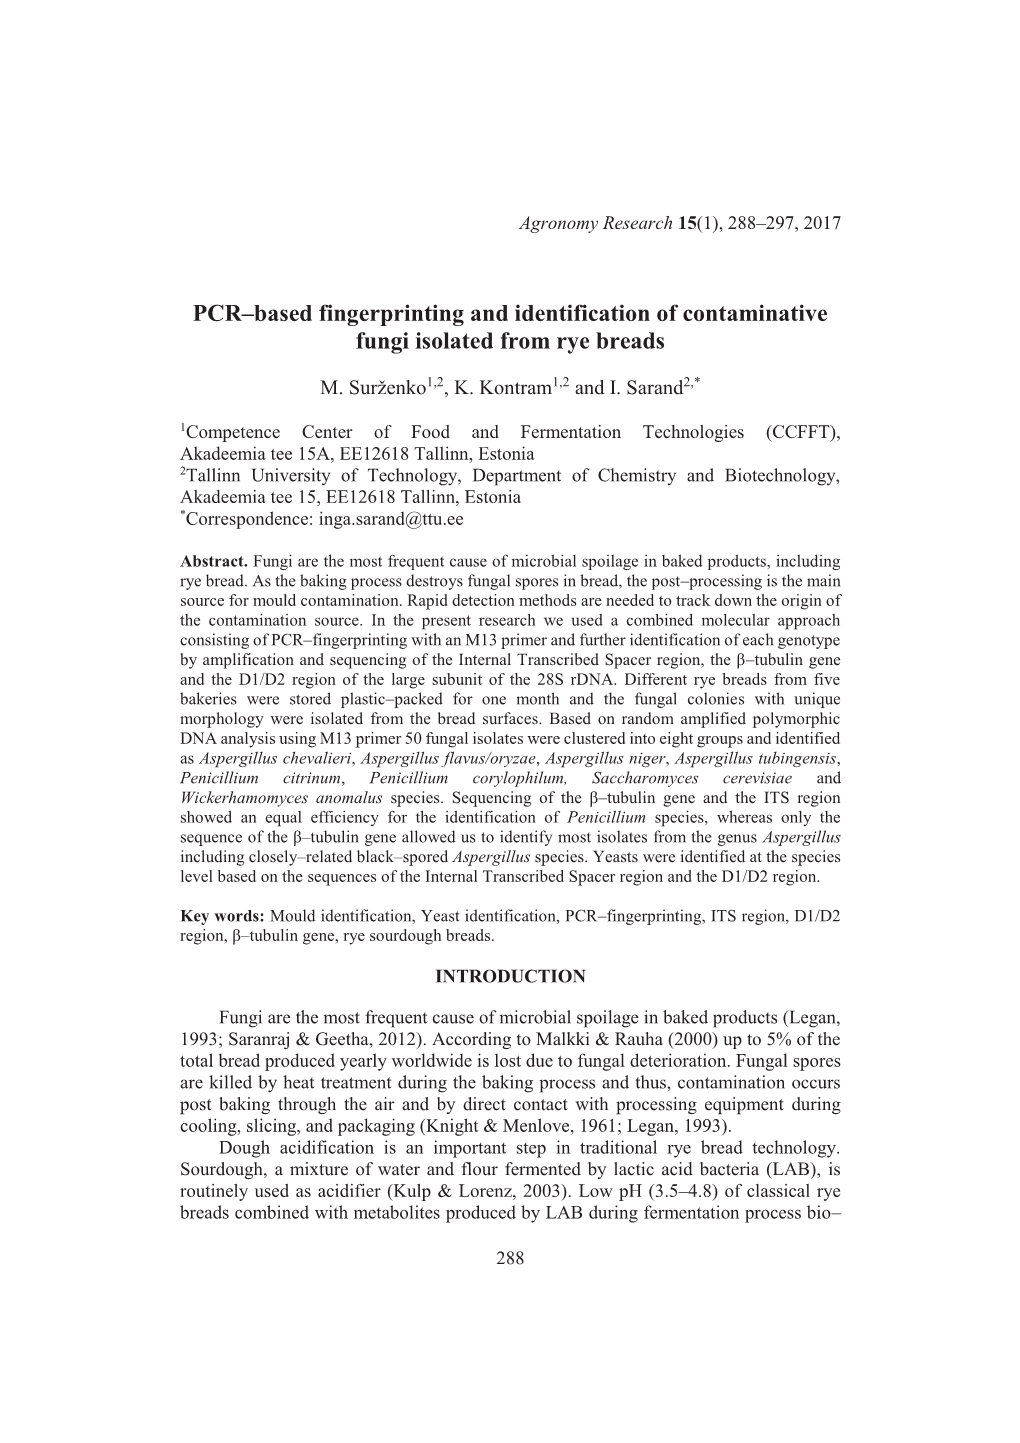 PCR–Based Fingerprinting and Identification of Contaminative Fungi